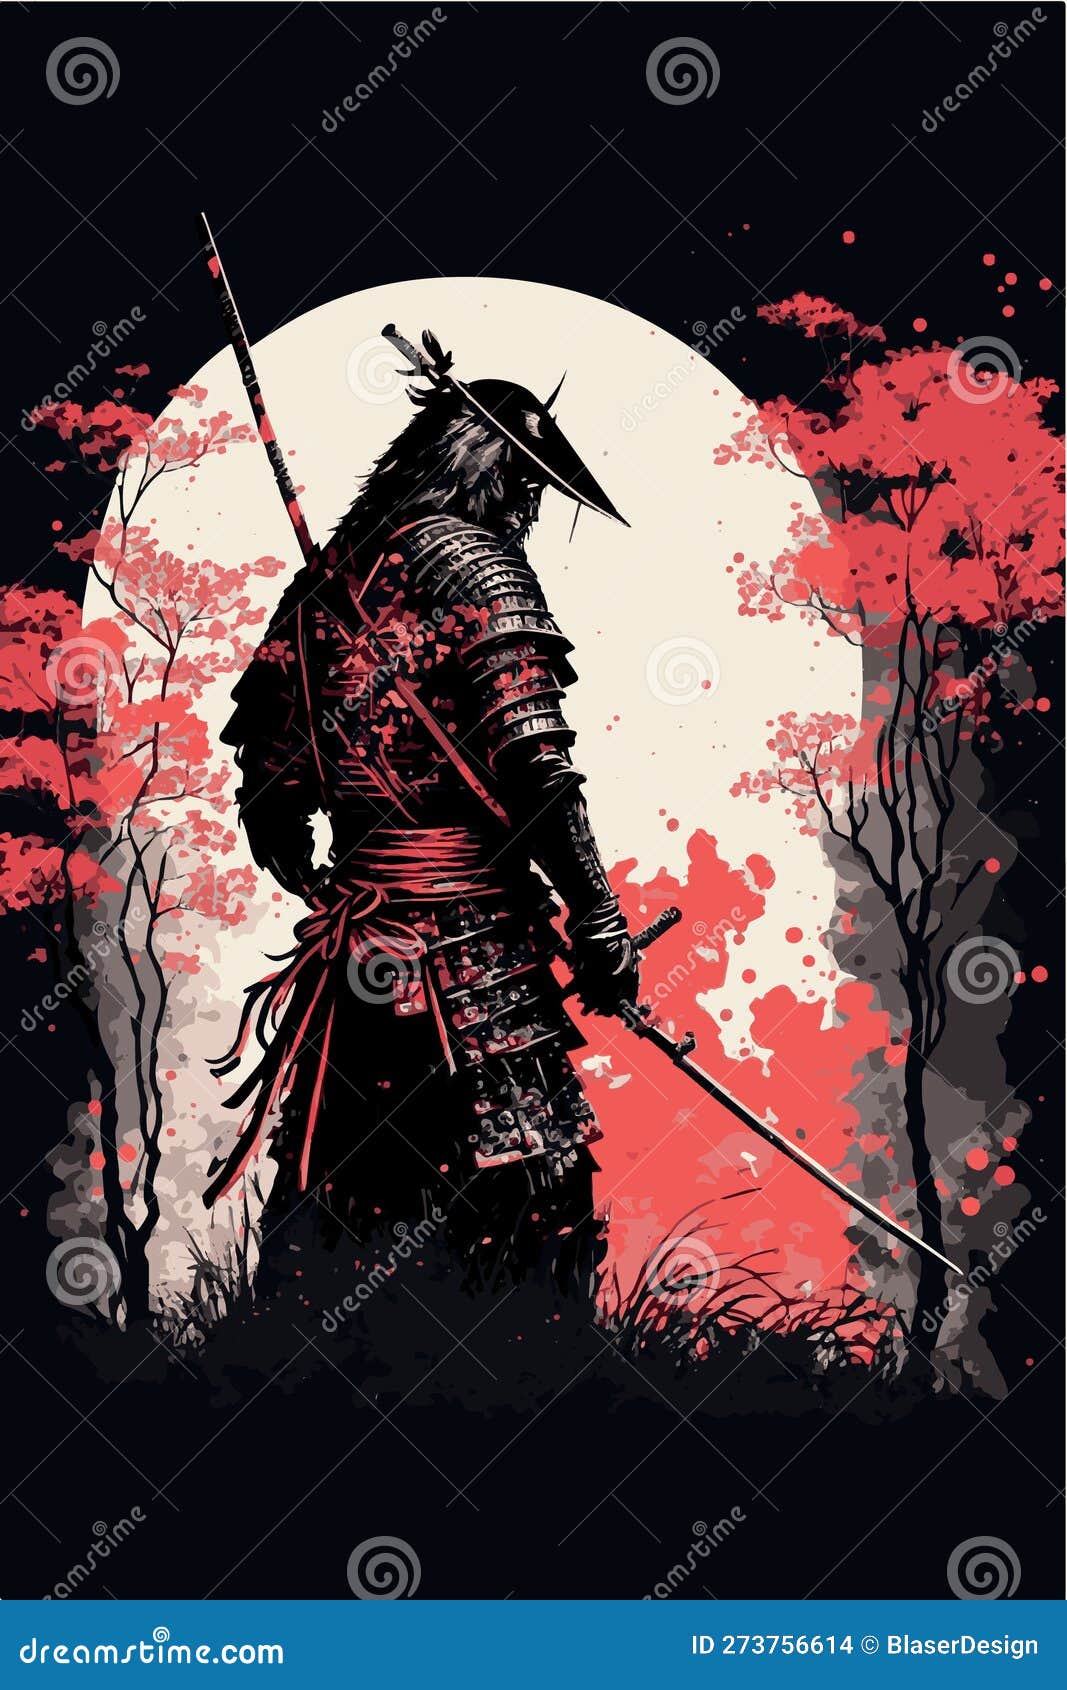 NINJA POWER!!!  Ninja warrior, Ninja art, Samurai artwork